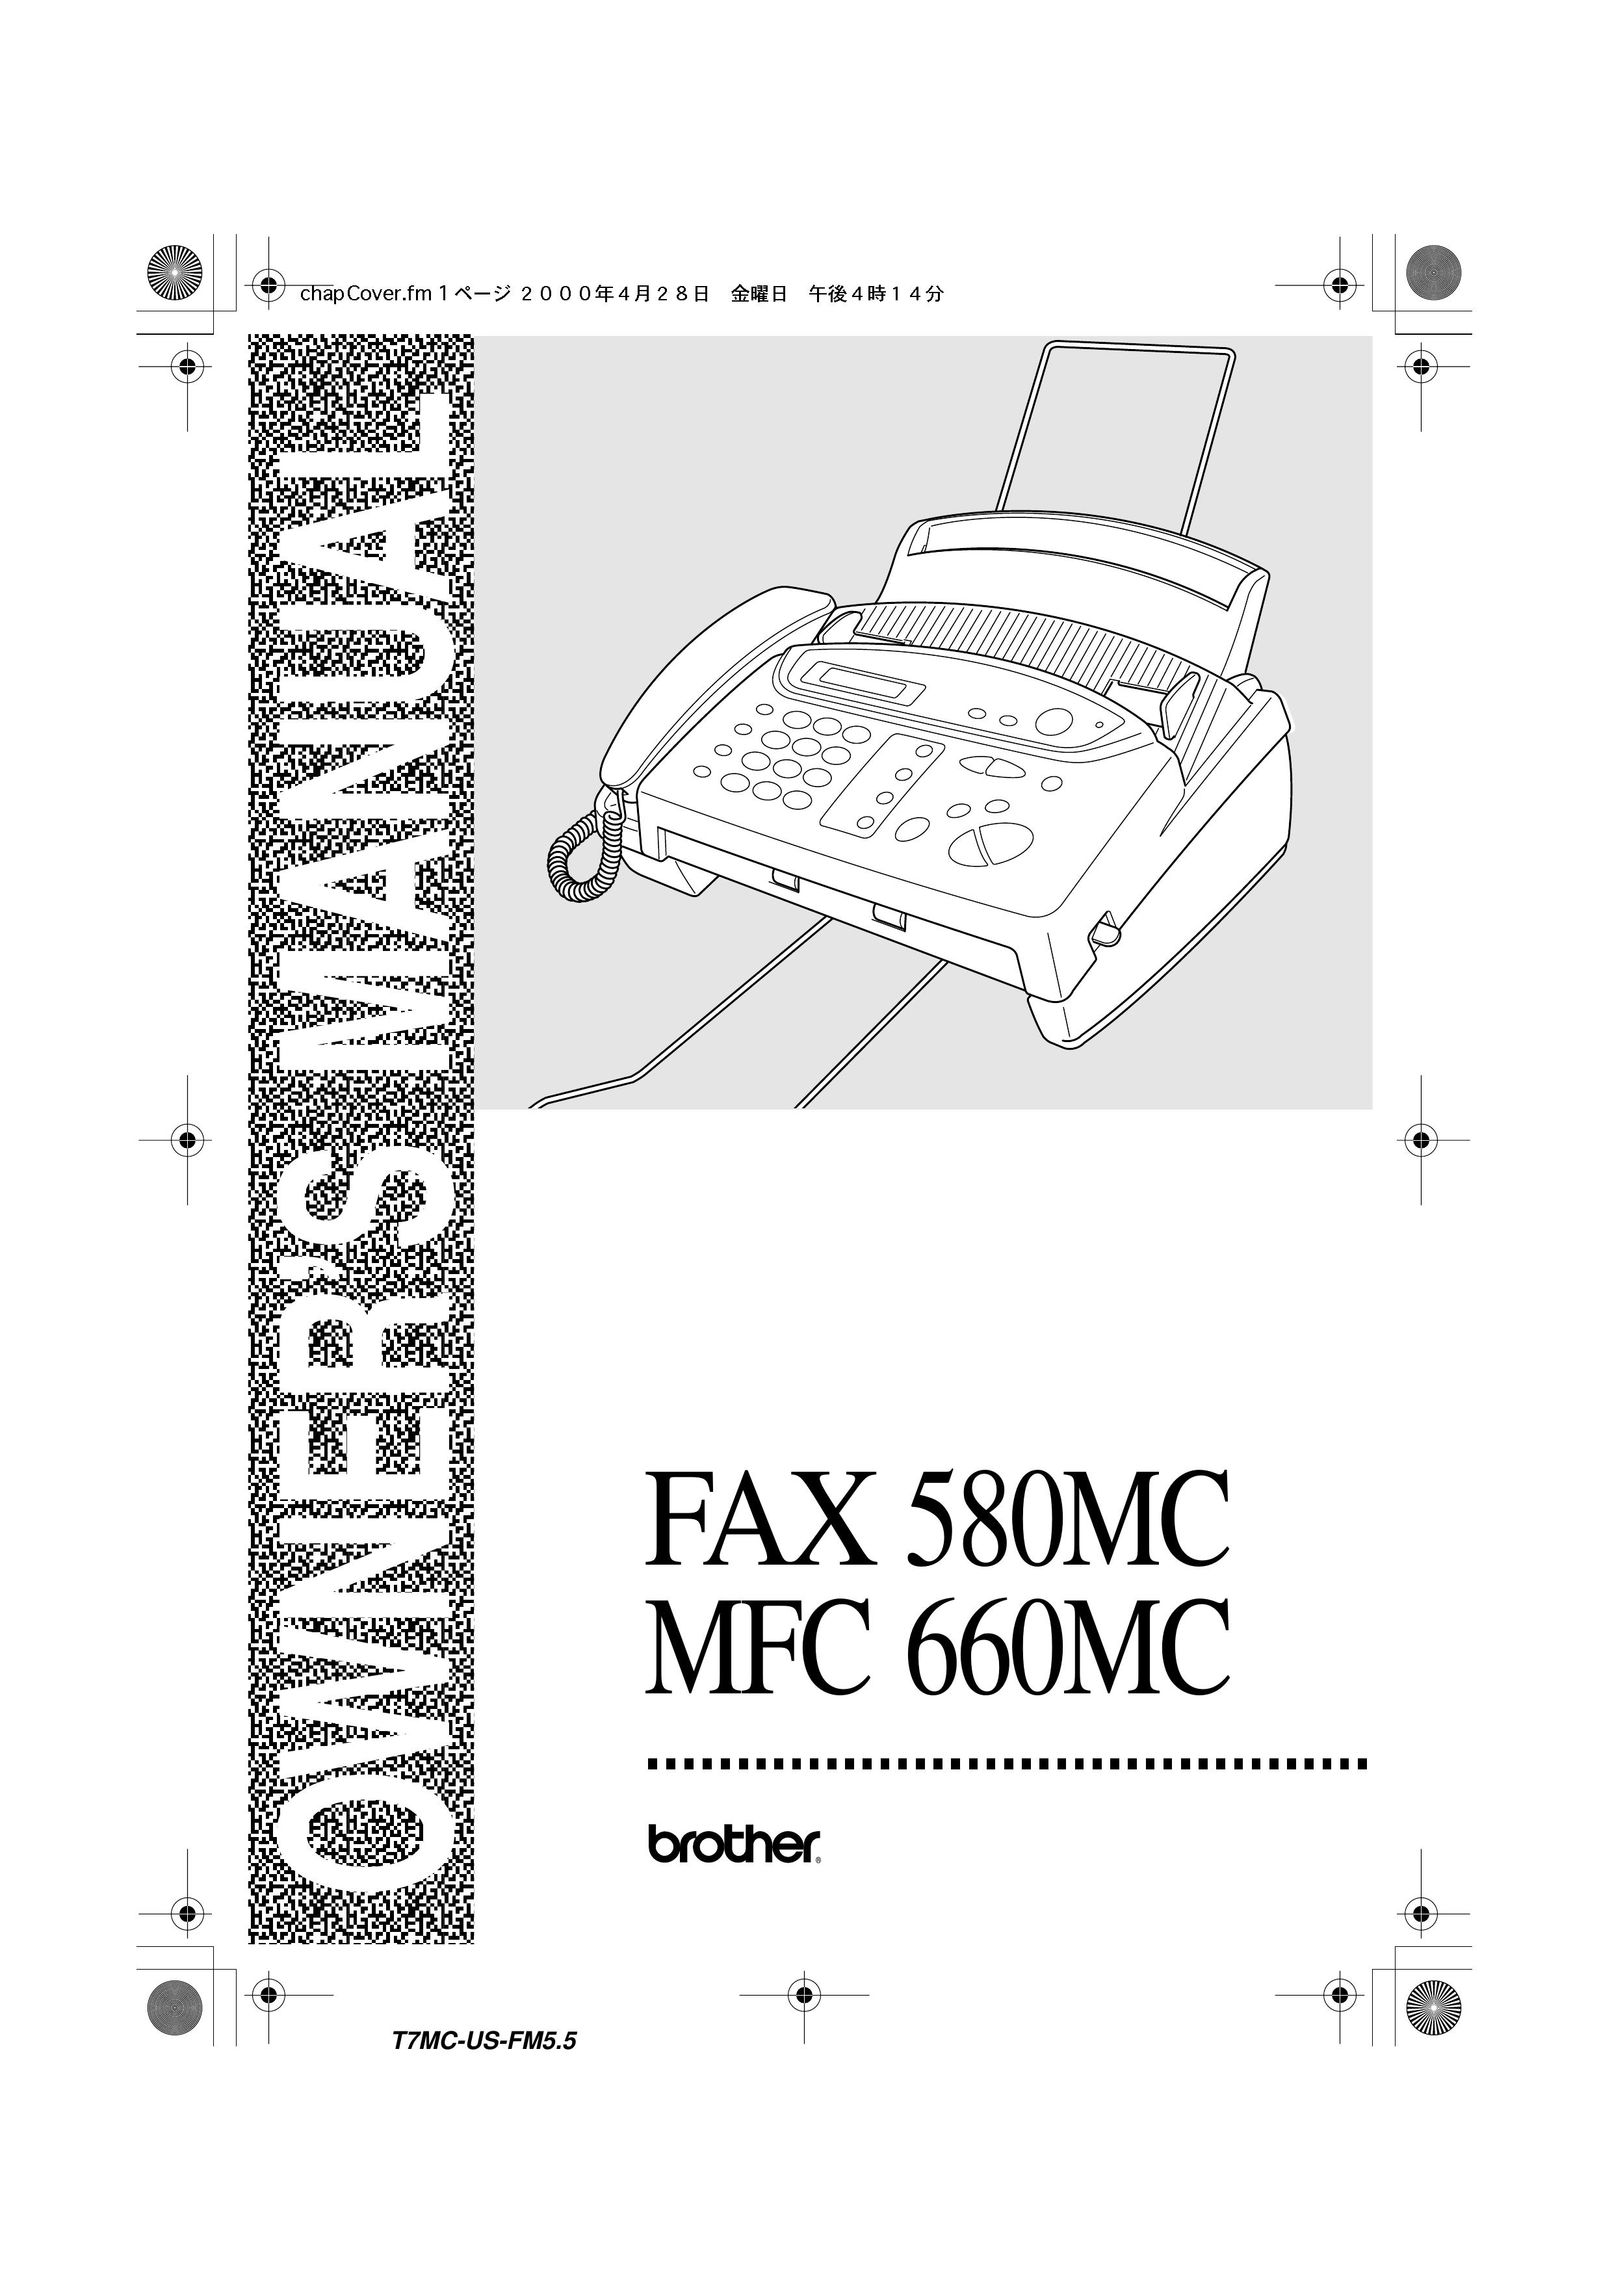 Brother 660MC Fax Machine User Manual